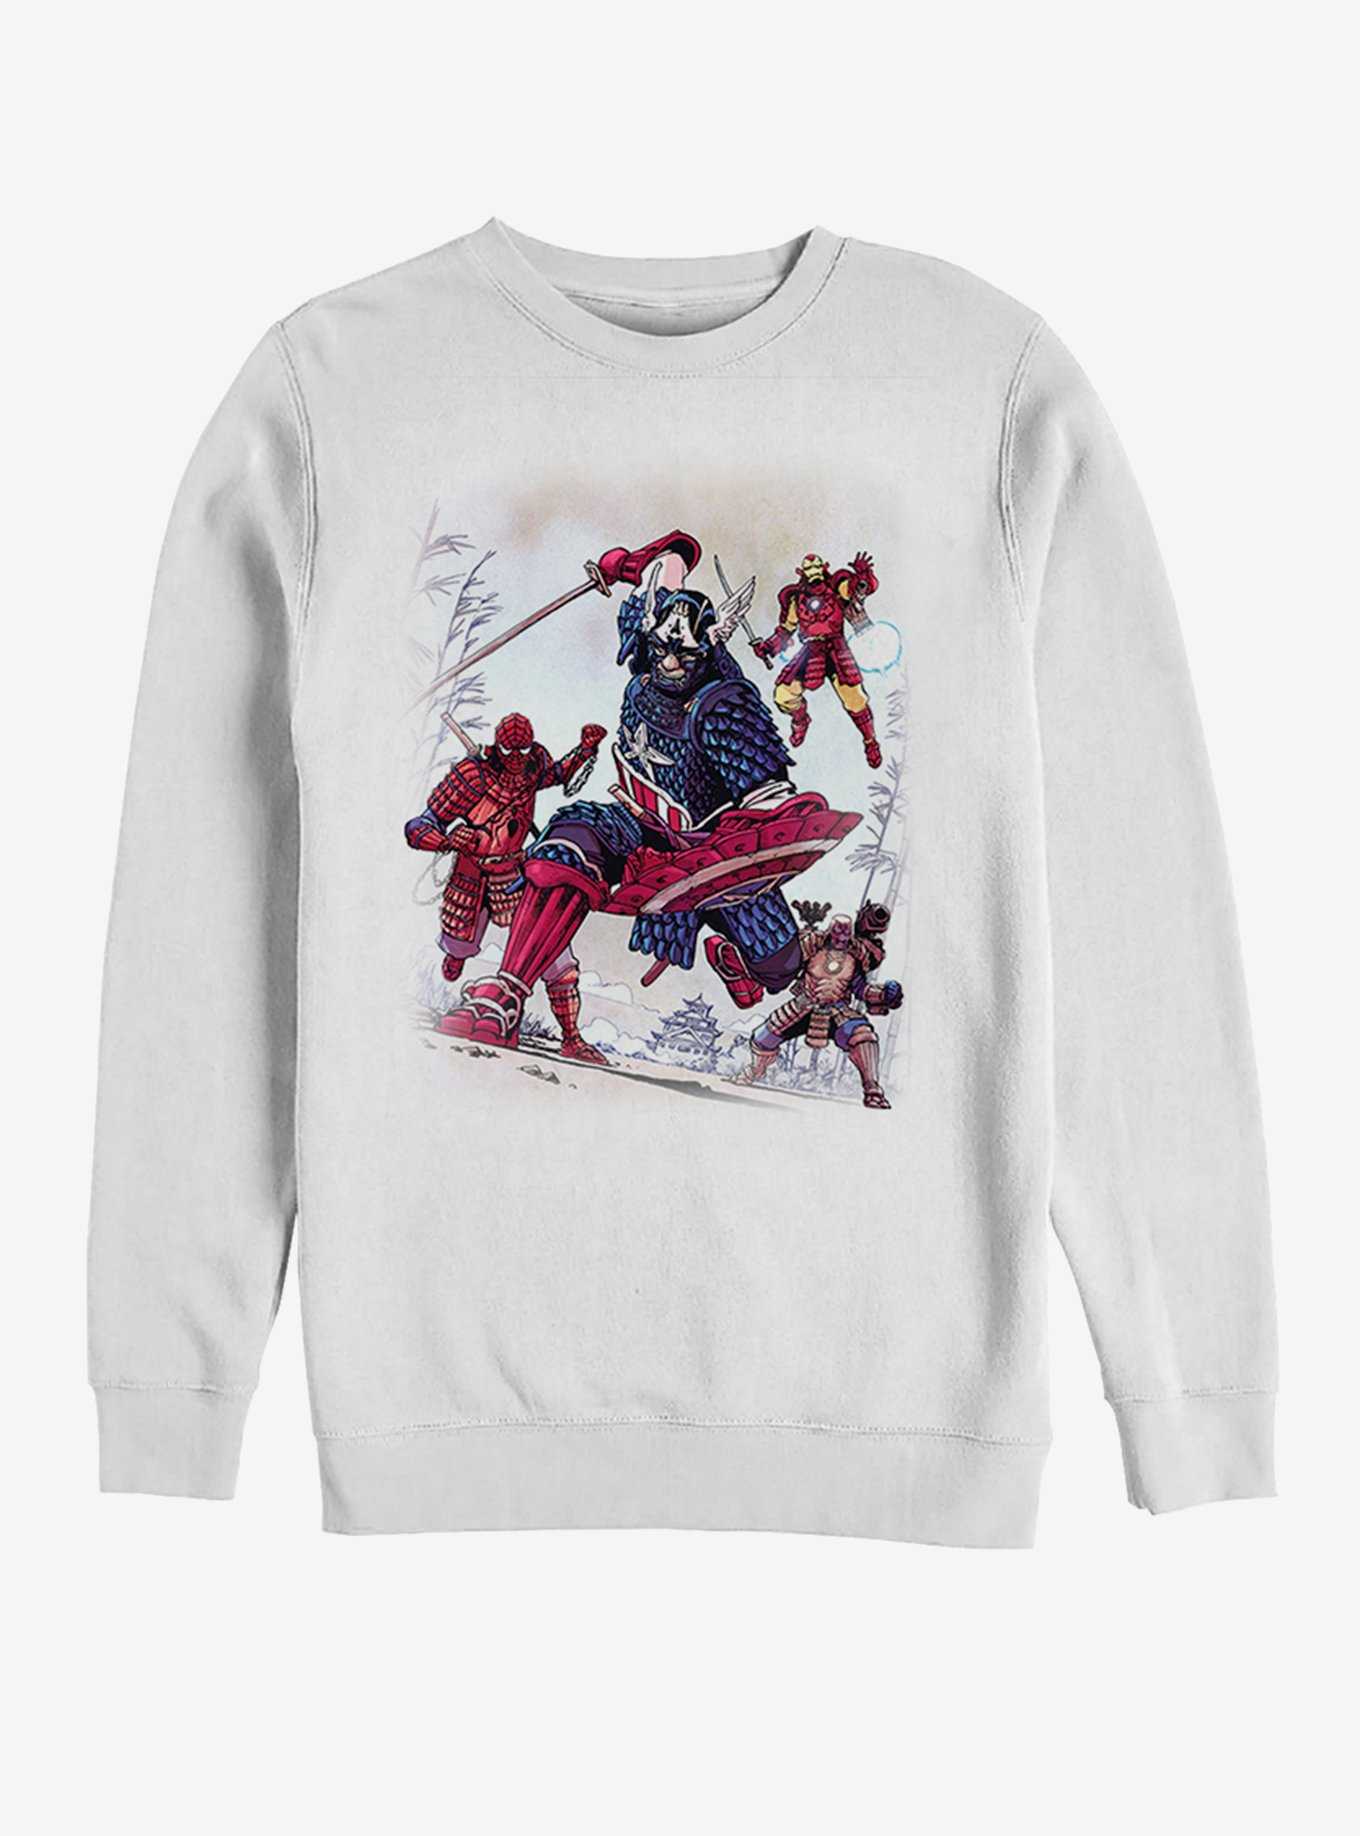 Marvel Samurai Warriors Sweatshirt, , hi-res